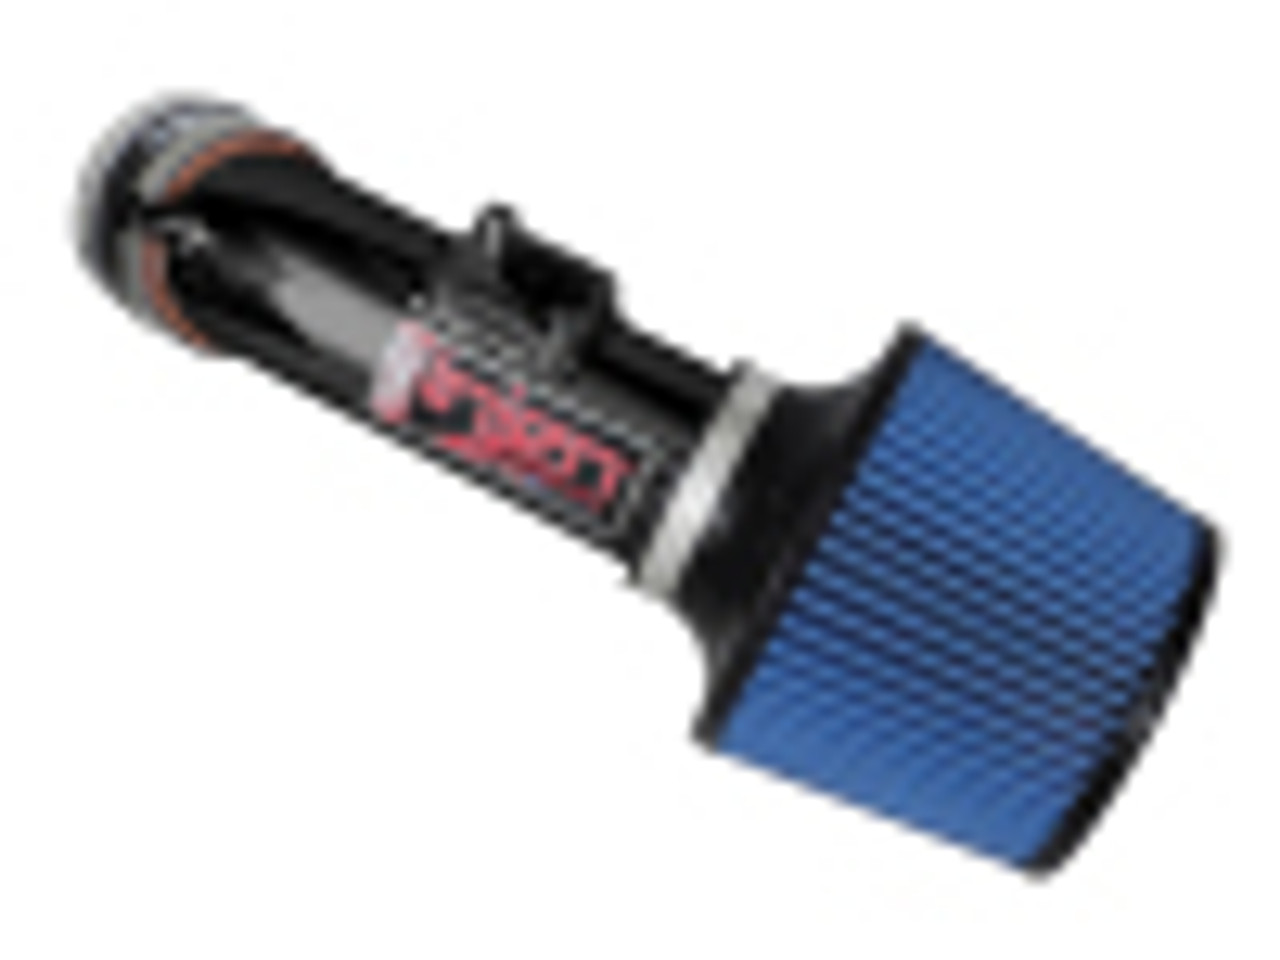 MAZDA SHORT RAM AIR INTAKE SYSTEM
Color: Black.  Intake Color: Laser Black.  Filter Color: Blue